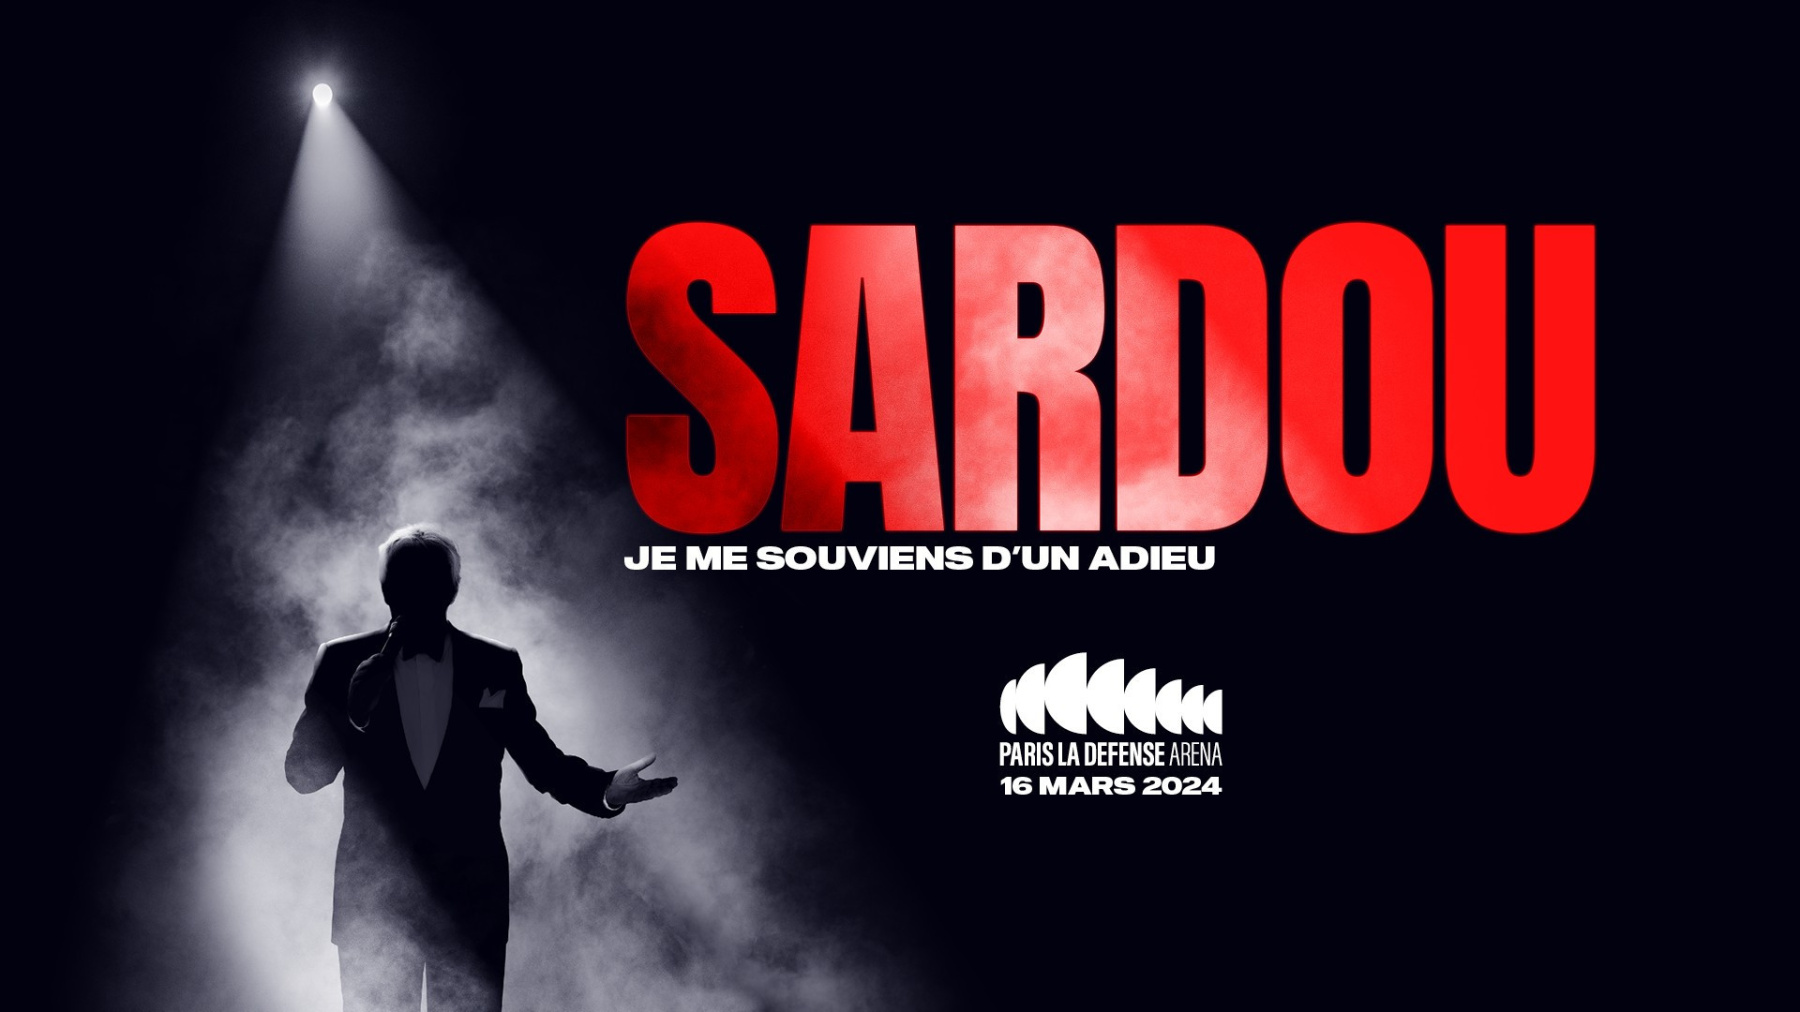 Michel Sardou live in March 2024, at Paris La Défense Arena extra